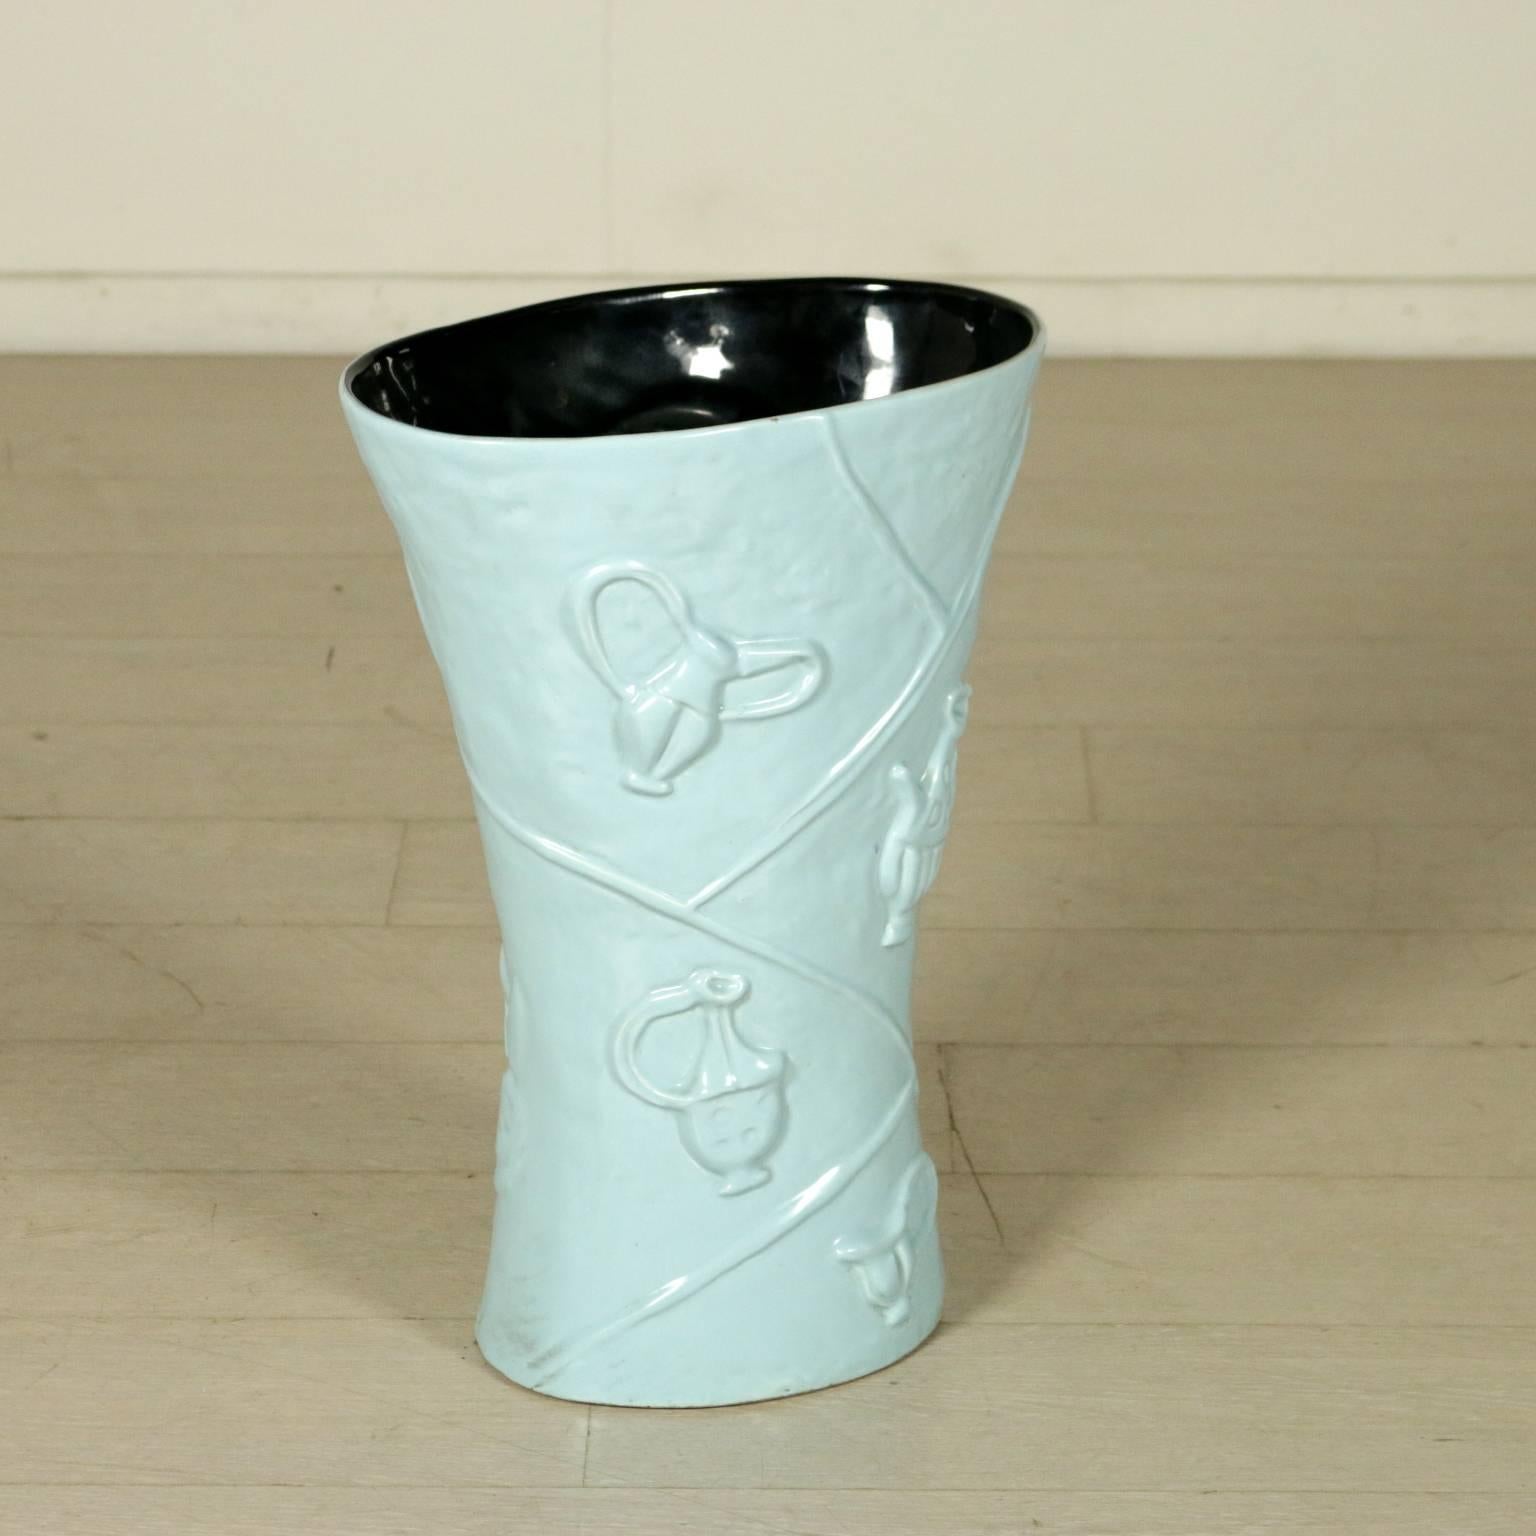 A ceramic vase/umbrella stand designed by Antonia Campi with embossed decorations. Manufactured in Italy by Società Ceramica Italiana di Laveno, 1950s. Manufacture mark underneath the base.